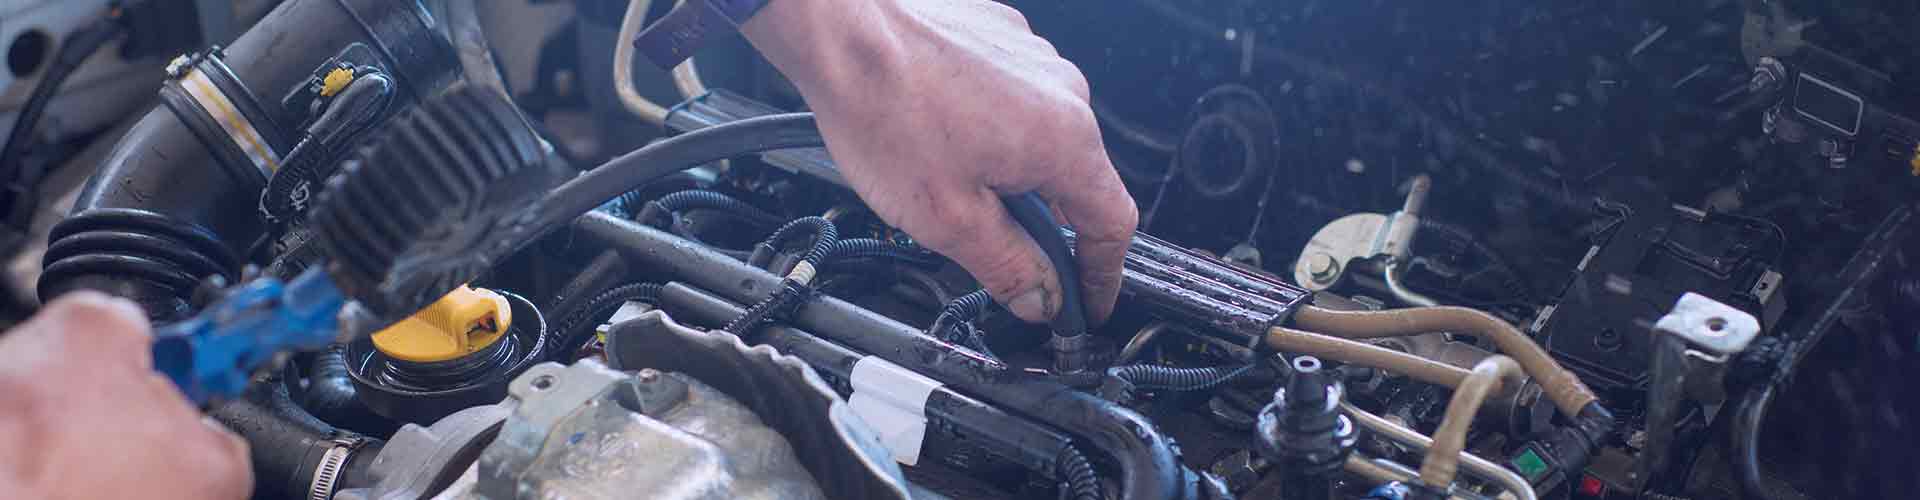 Lovettsville Auto Repair, Car Repair and Auto Mechanic